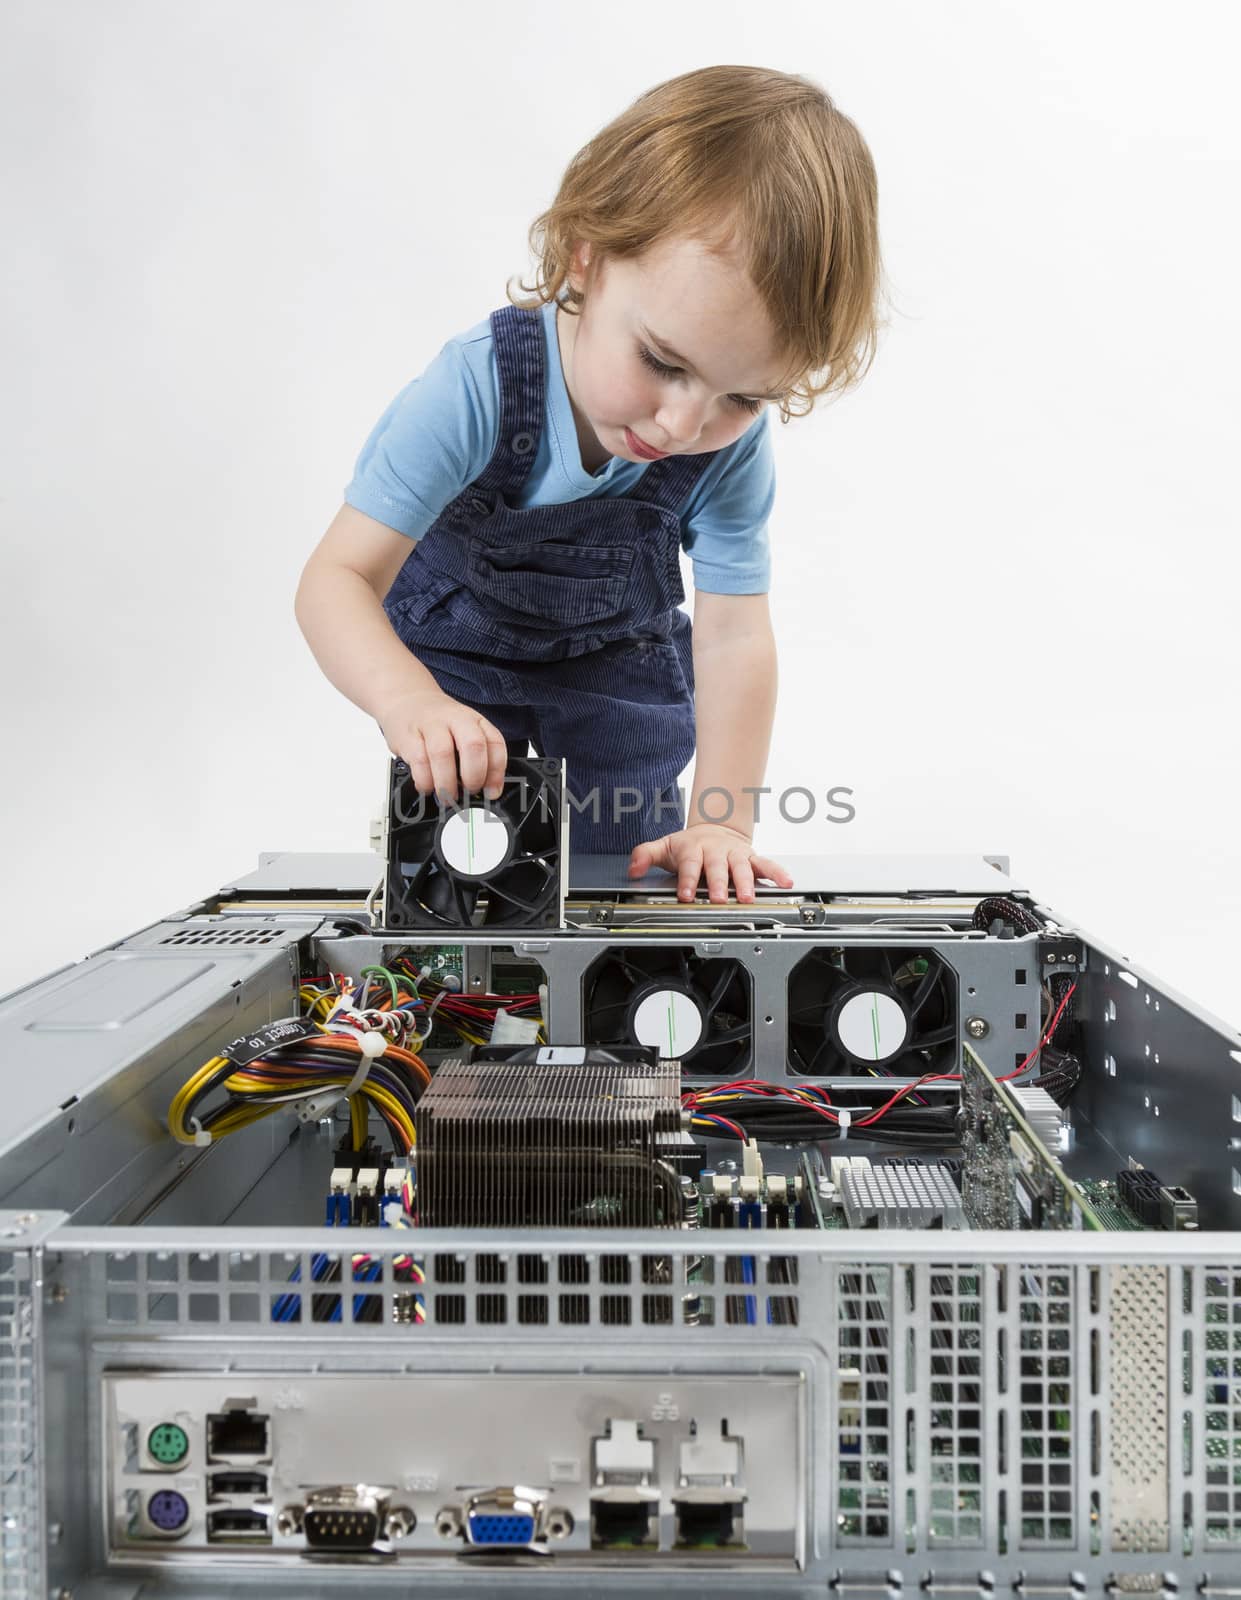 child repairing network computer by gewoldi